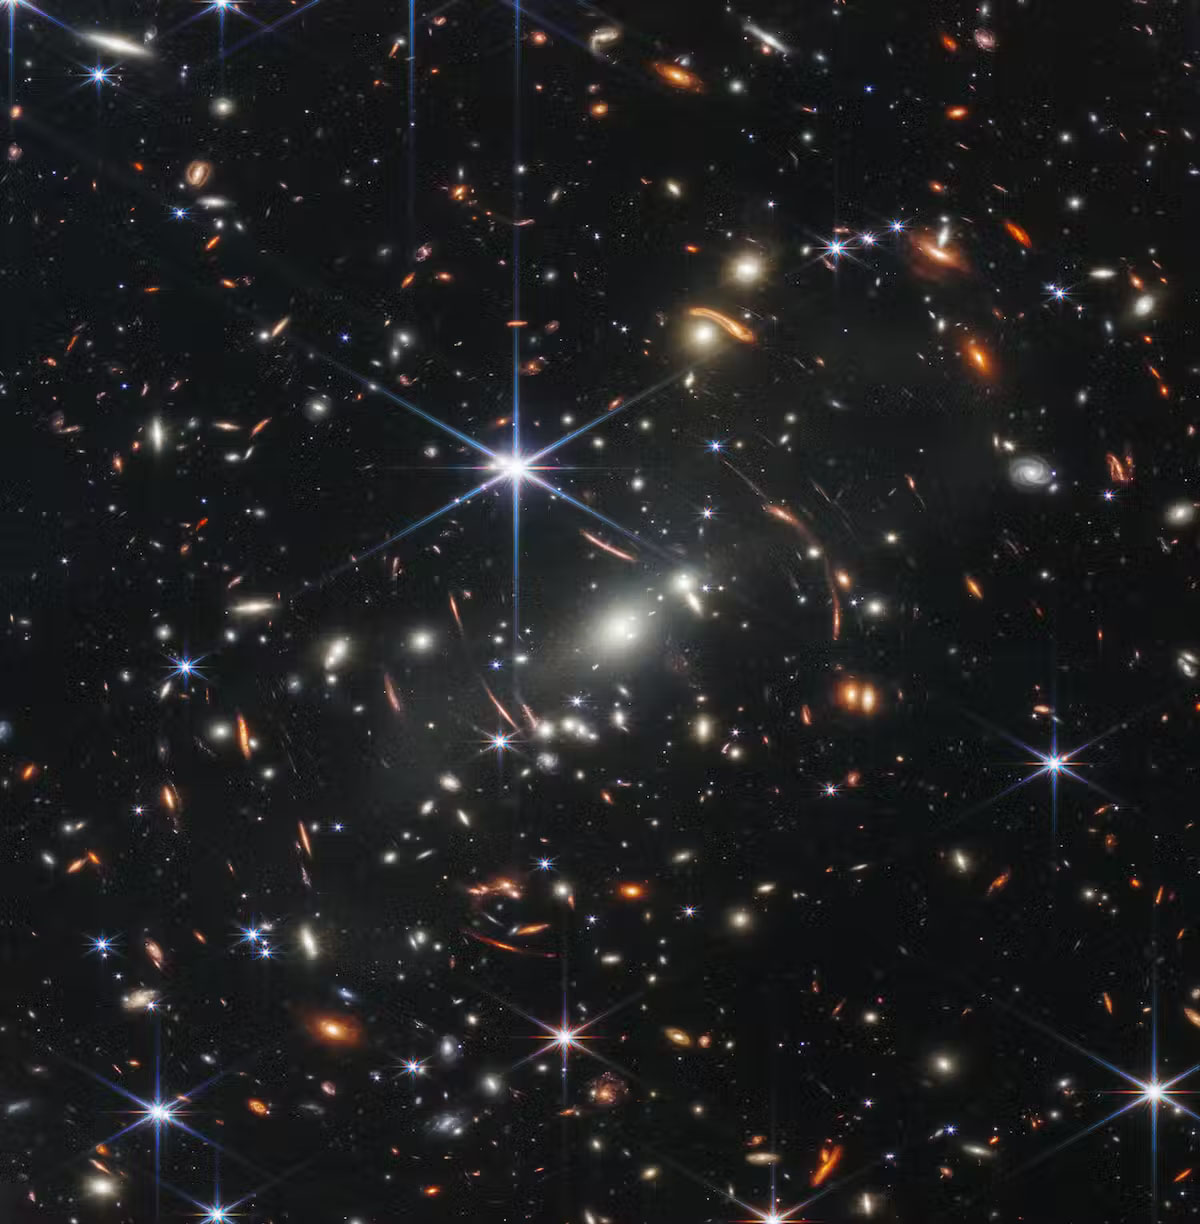 image of galaxies